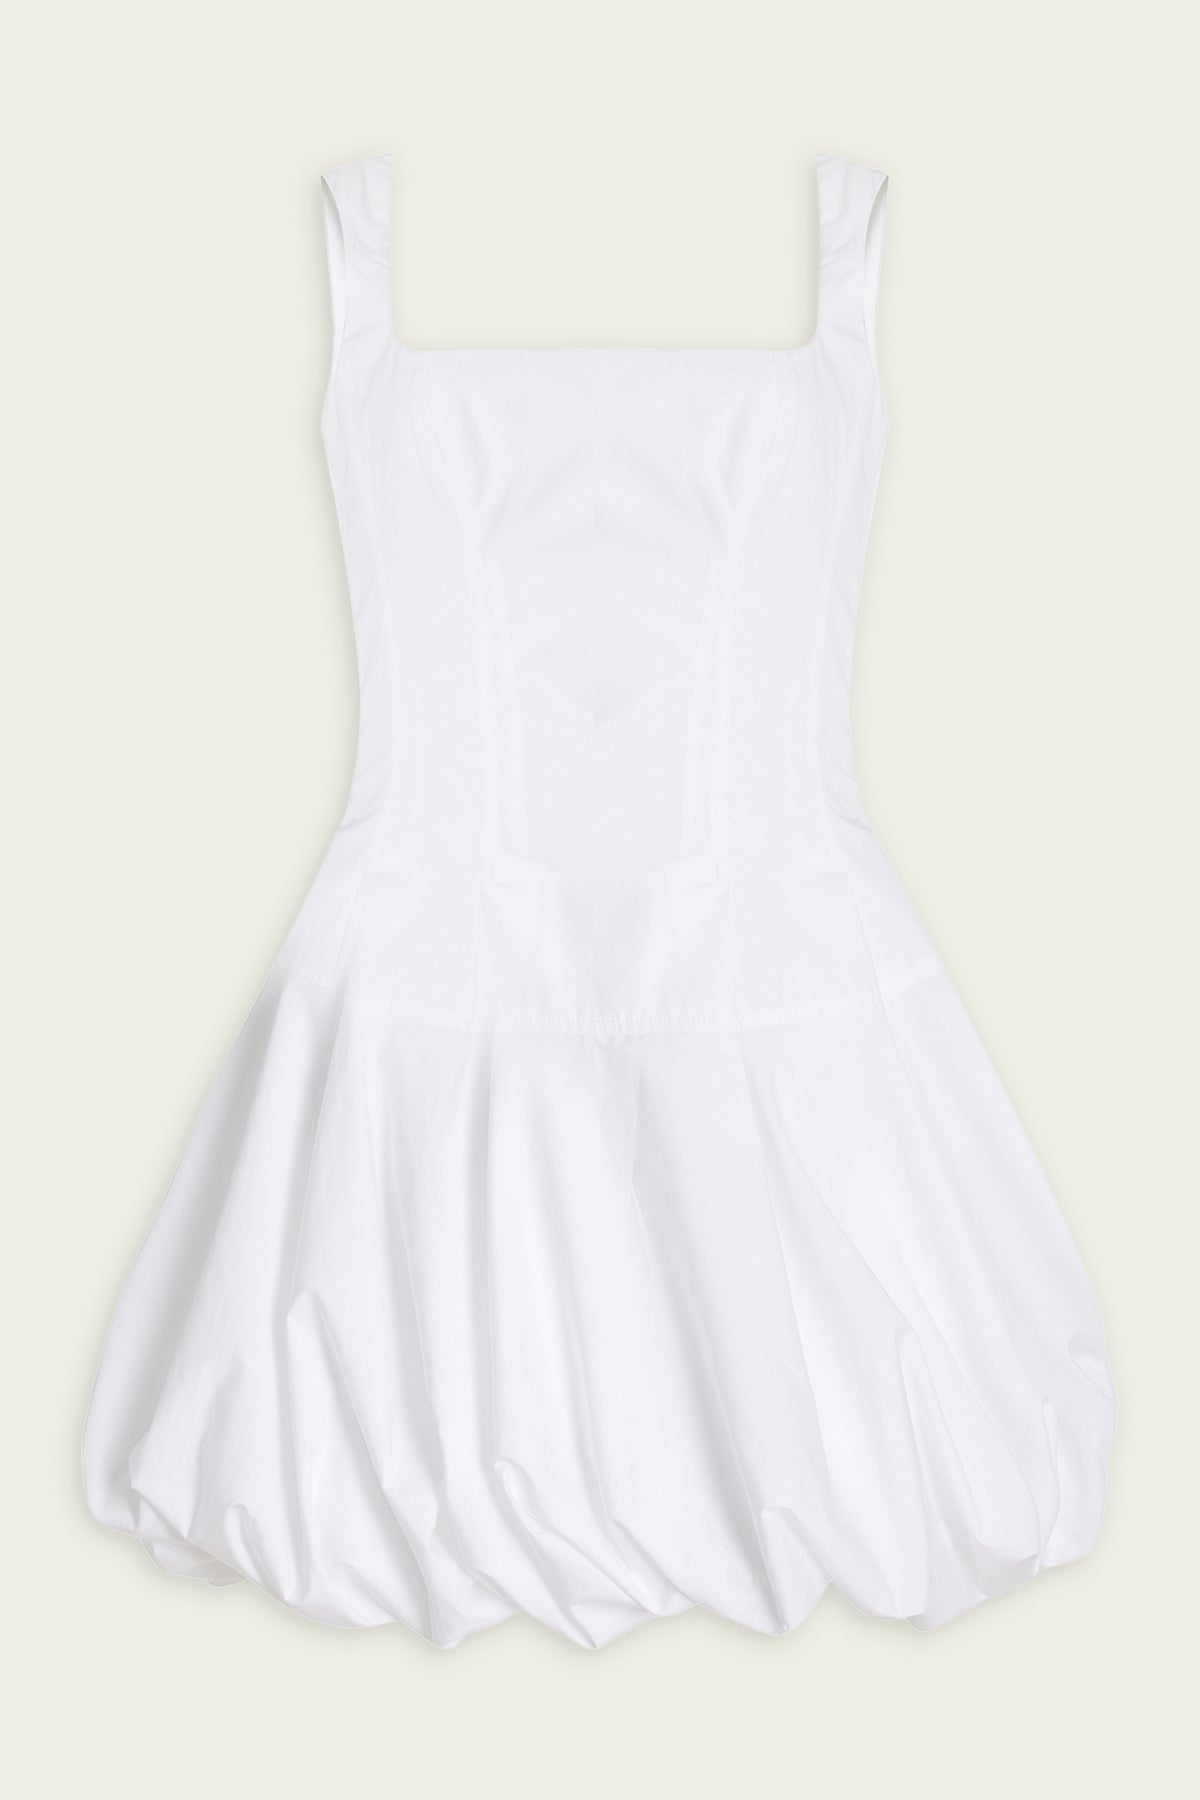 Juni Bubble Mini Dress in White - shop-olivia.com